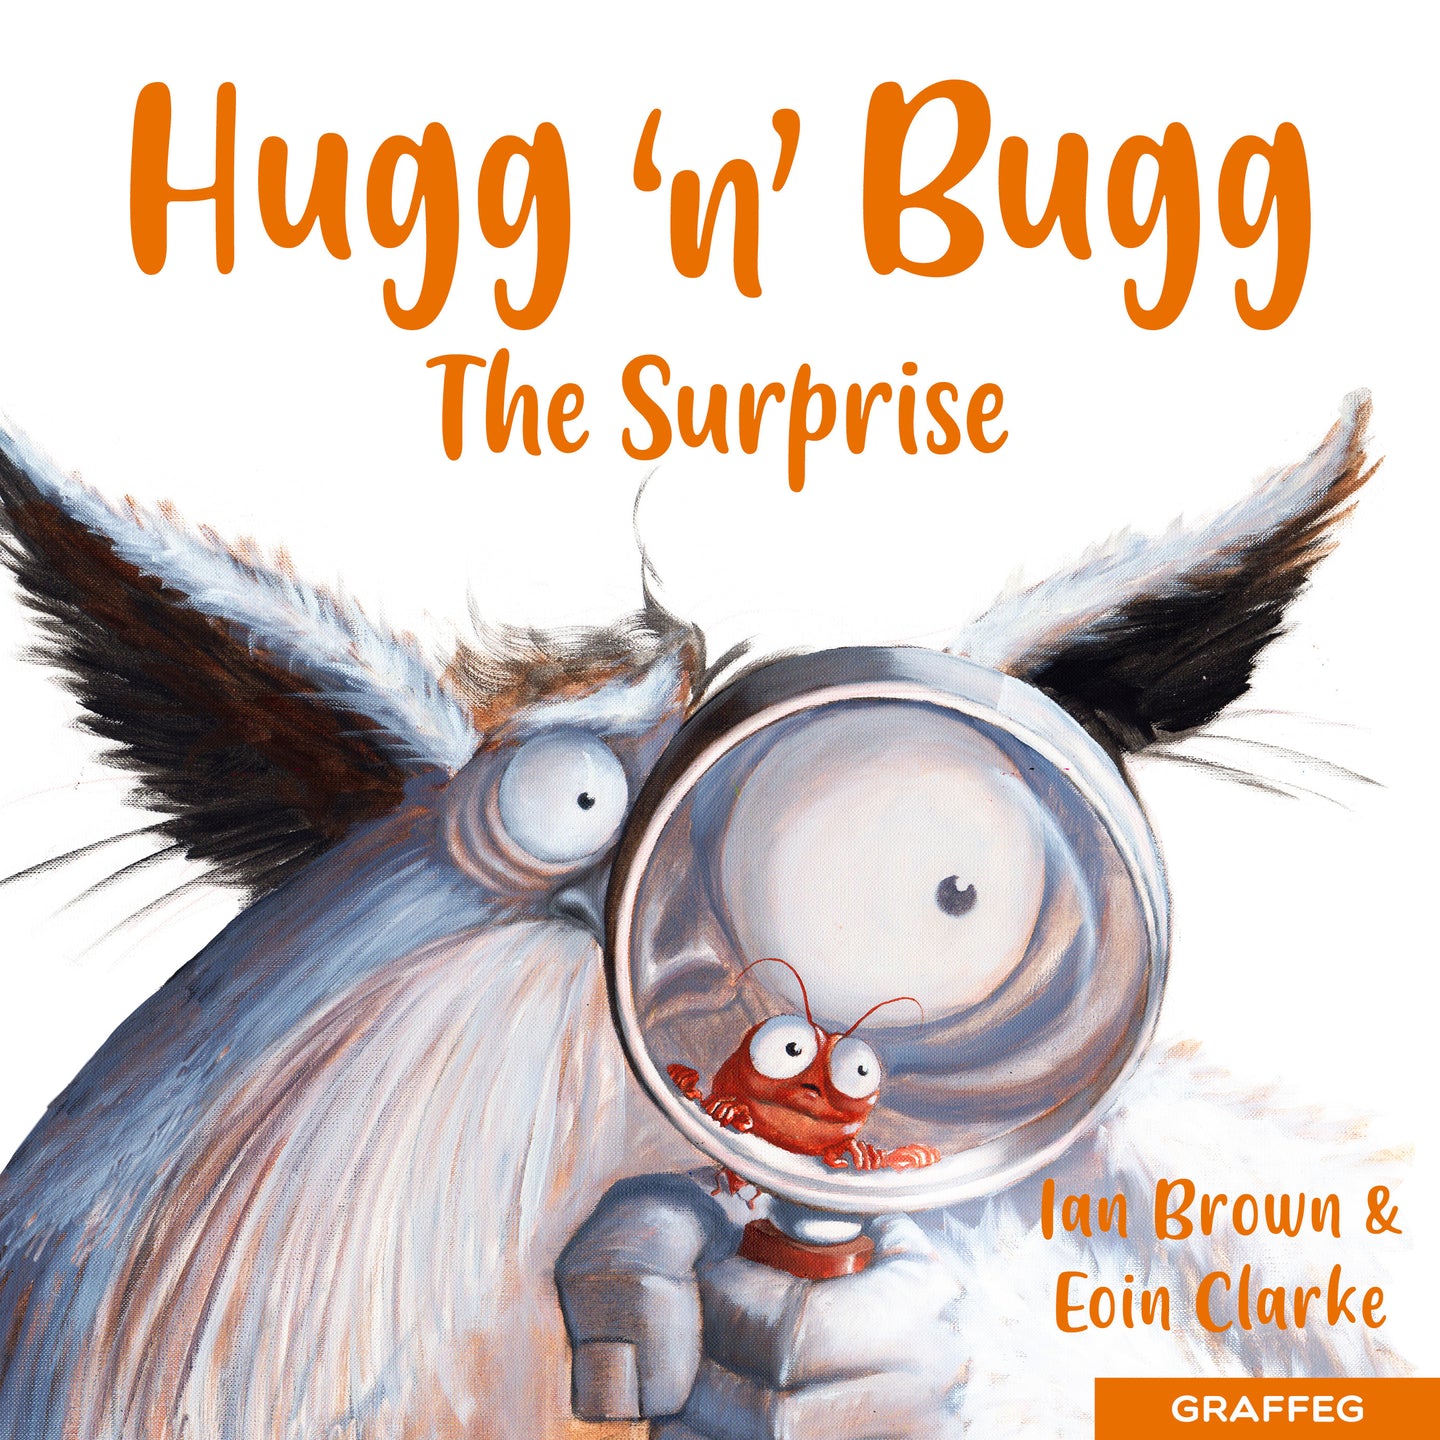 Hugg 'n' Bugg: The Surprise